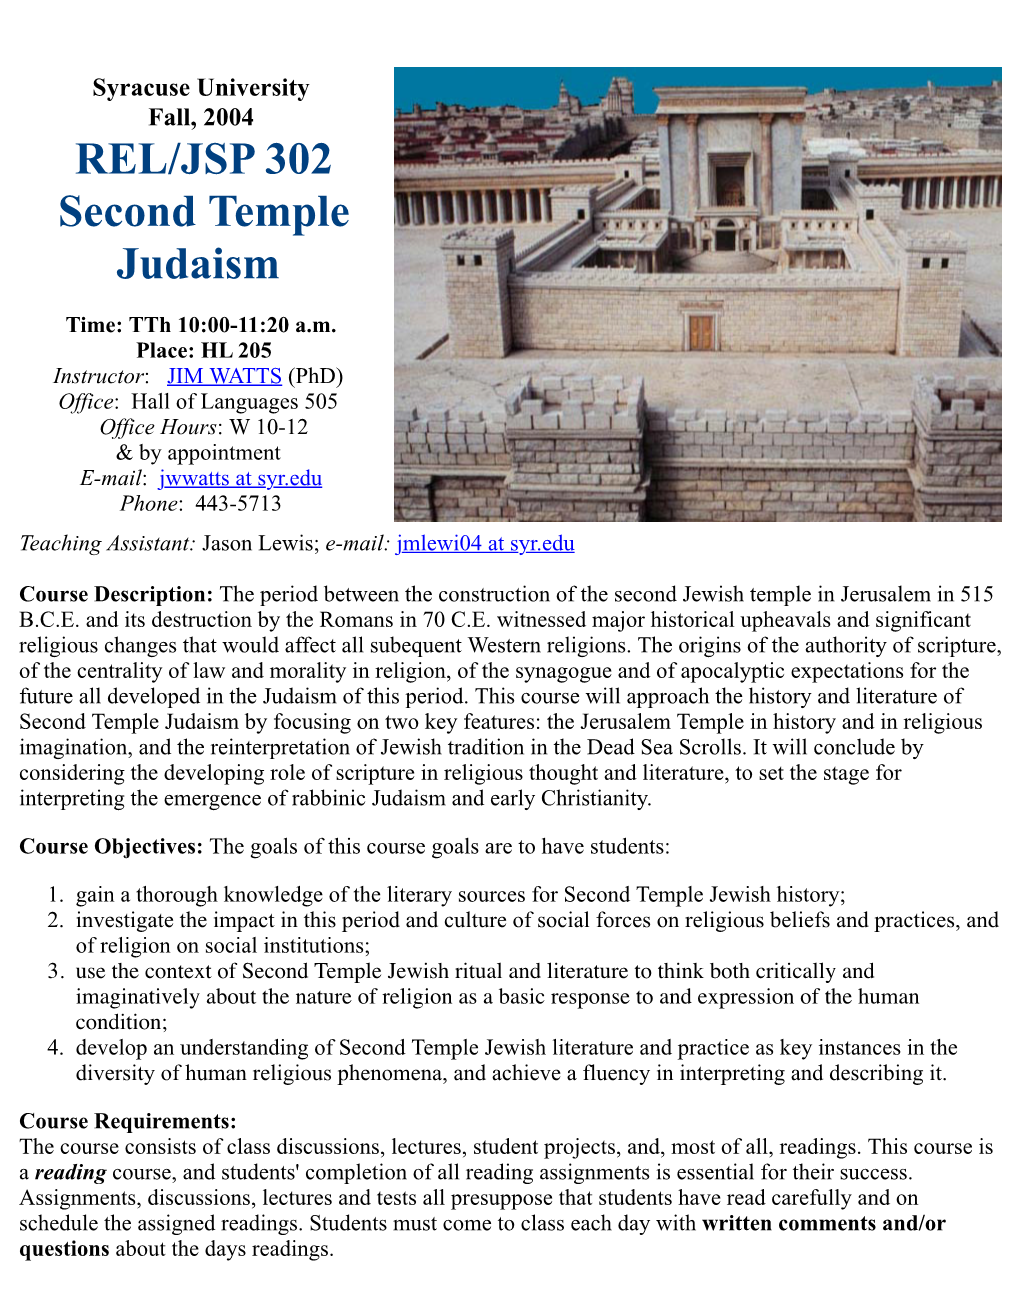 Second Temple Judaism